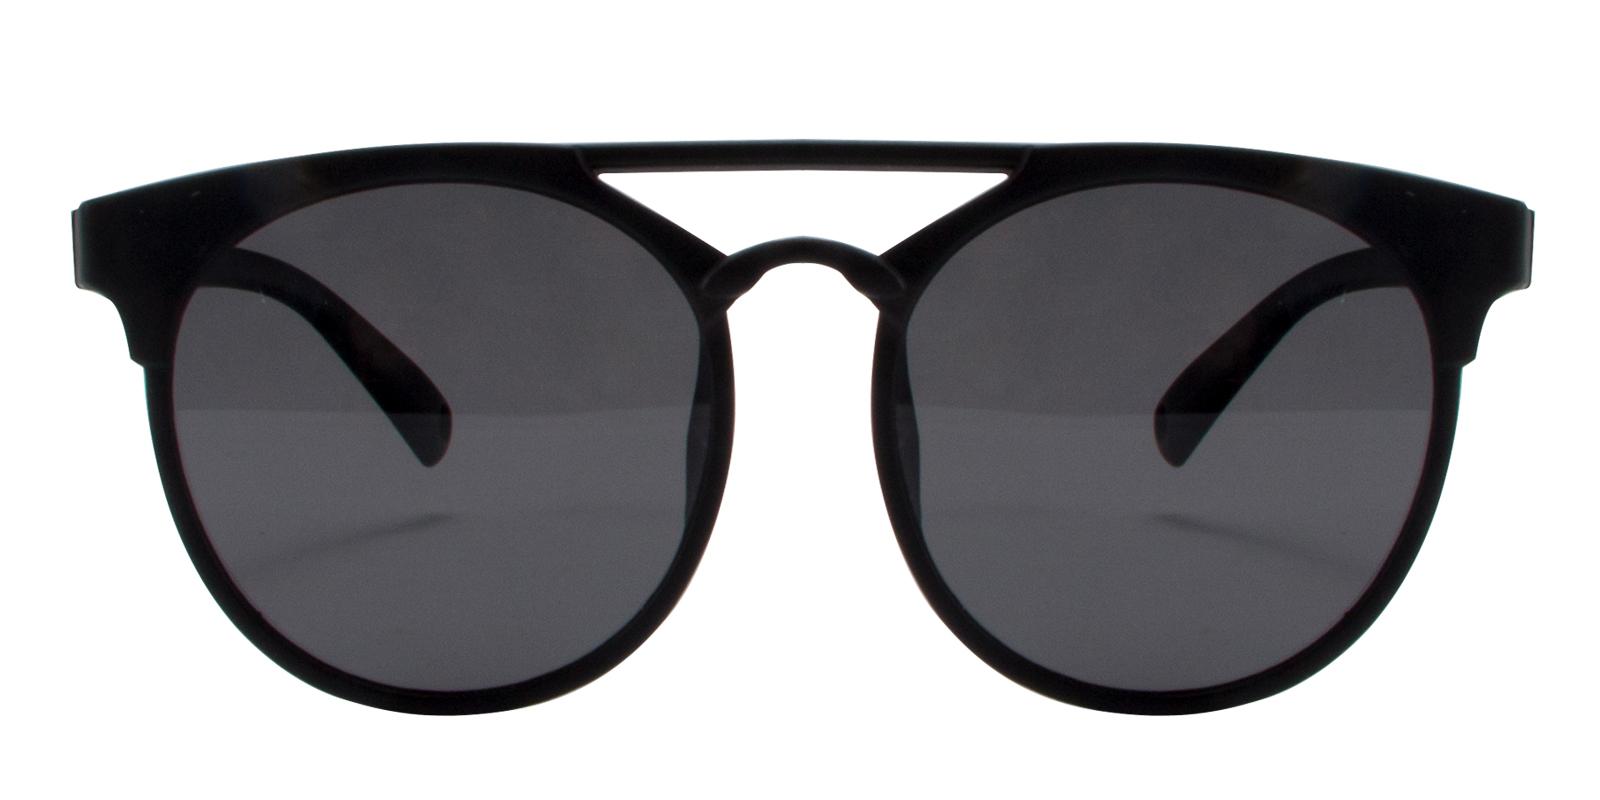 Nix Gray TR Sunglasses Frames from ABBE Glasses